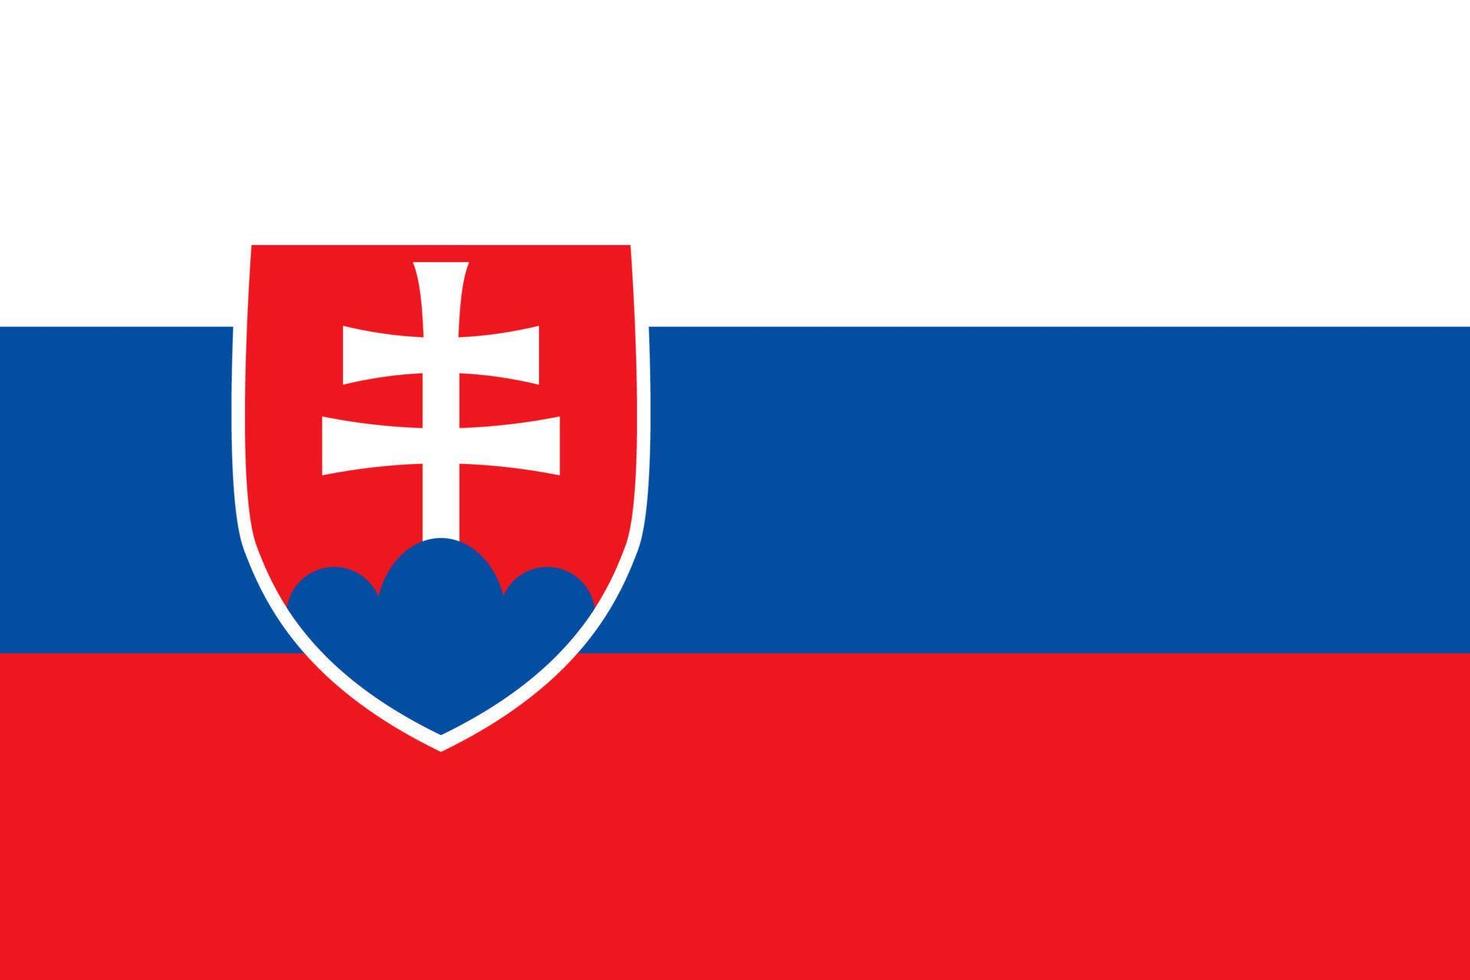 Flat Illustration of Slovakia flag vector